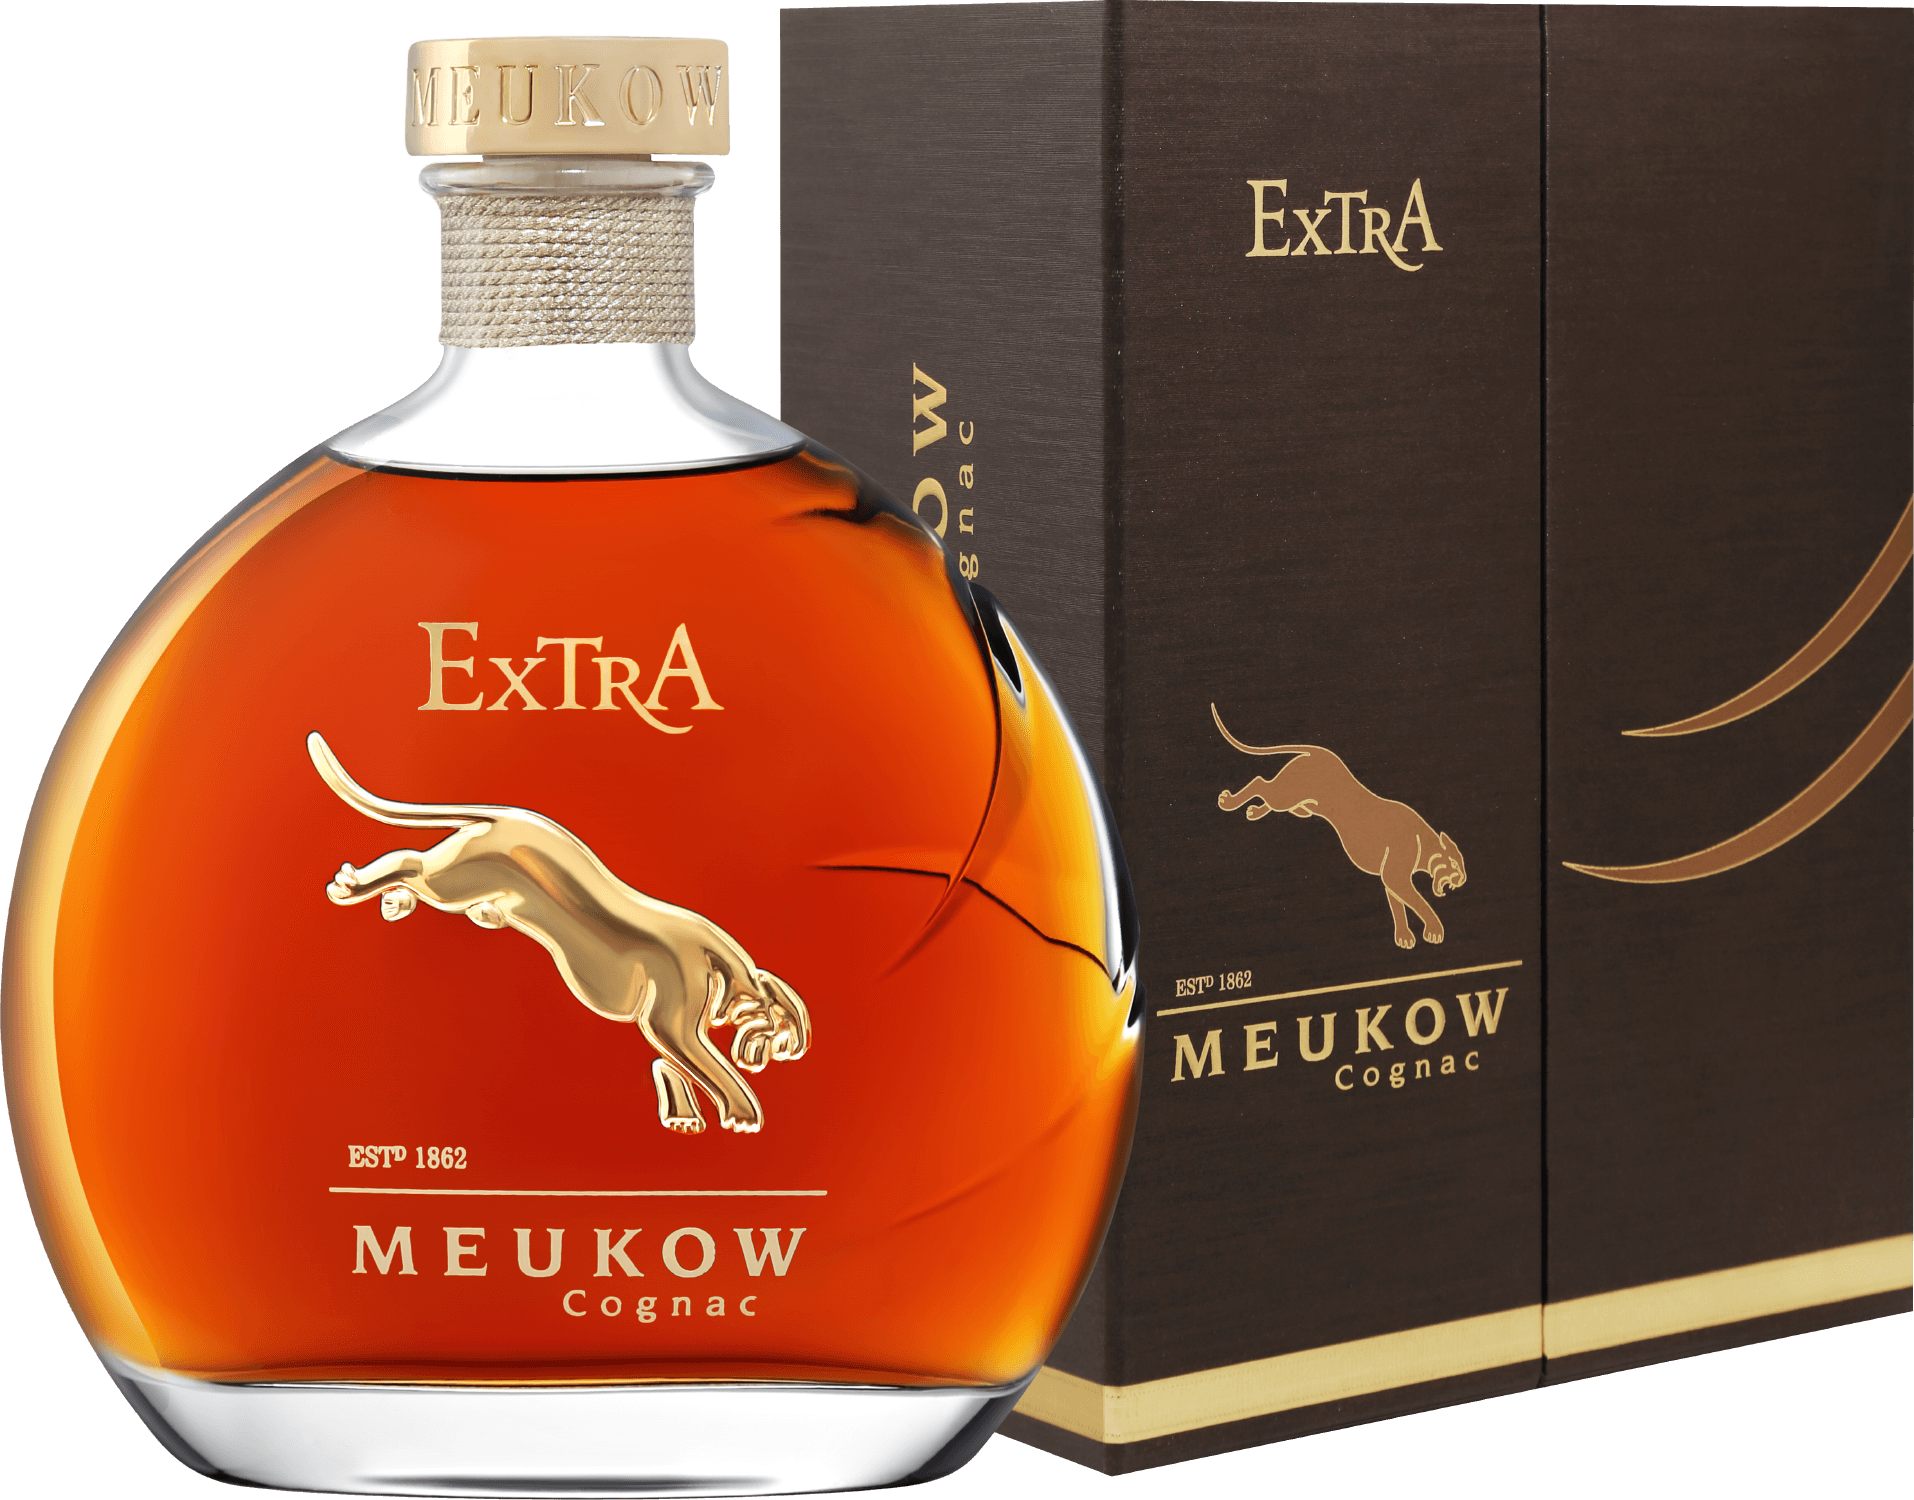 Meukow Cognac Extra (gift box)